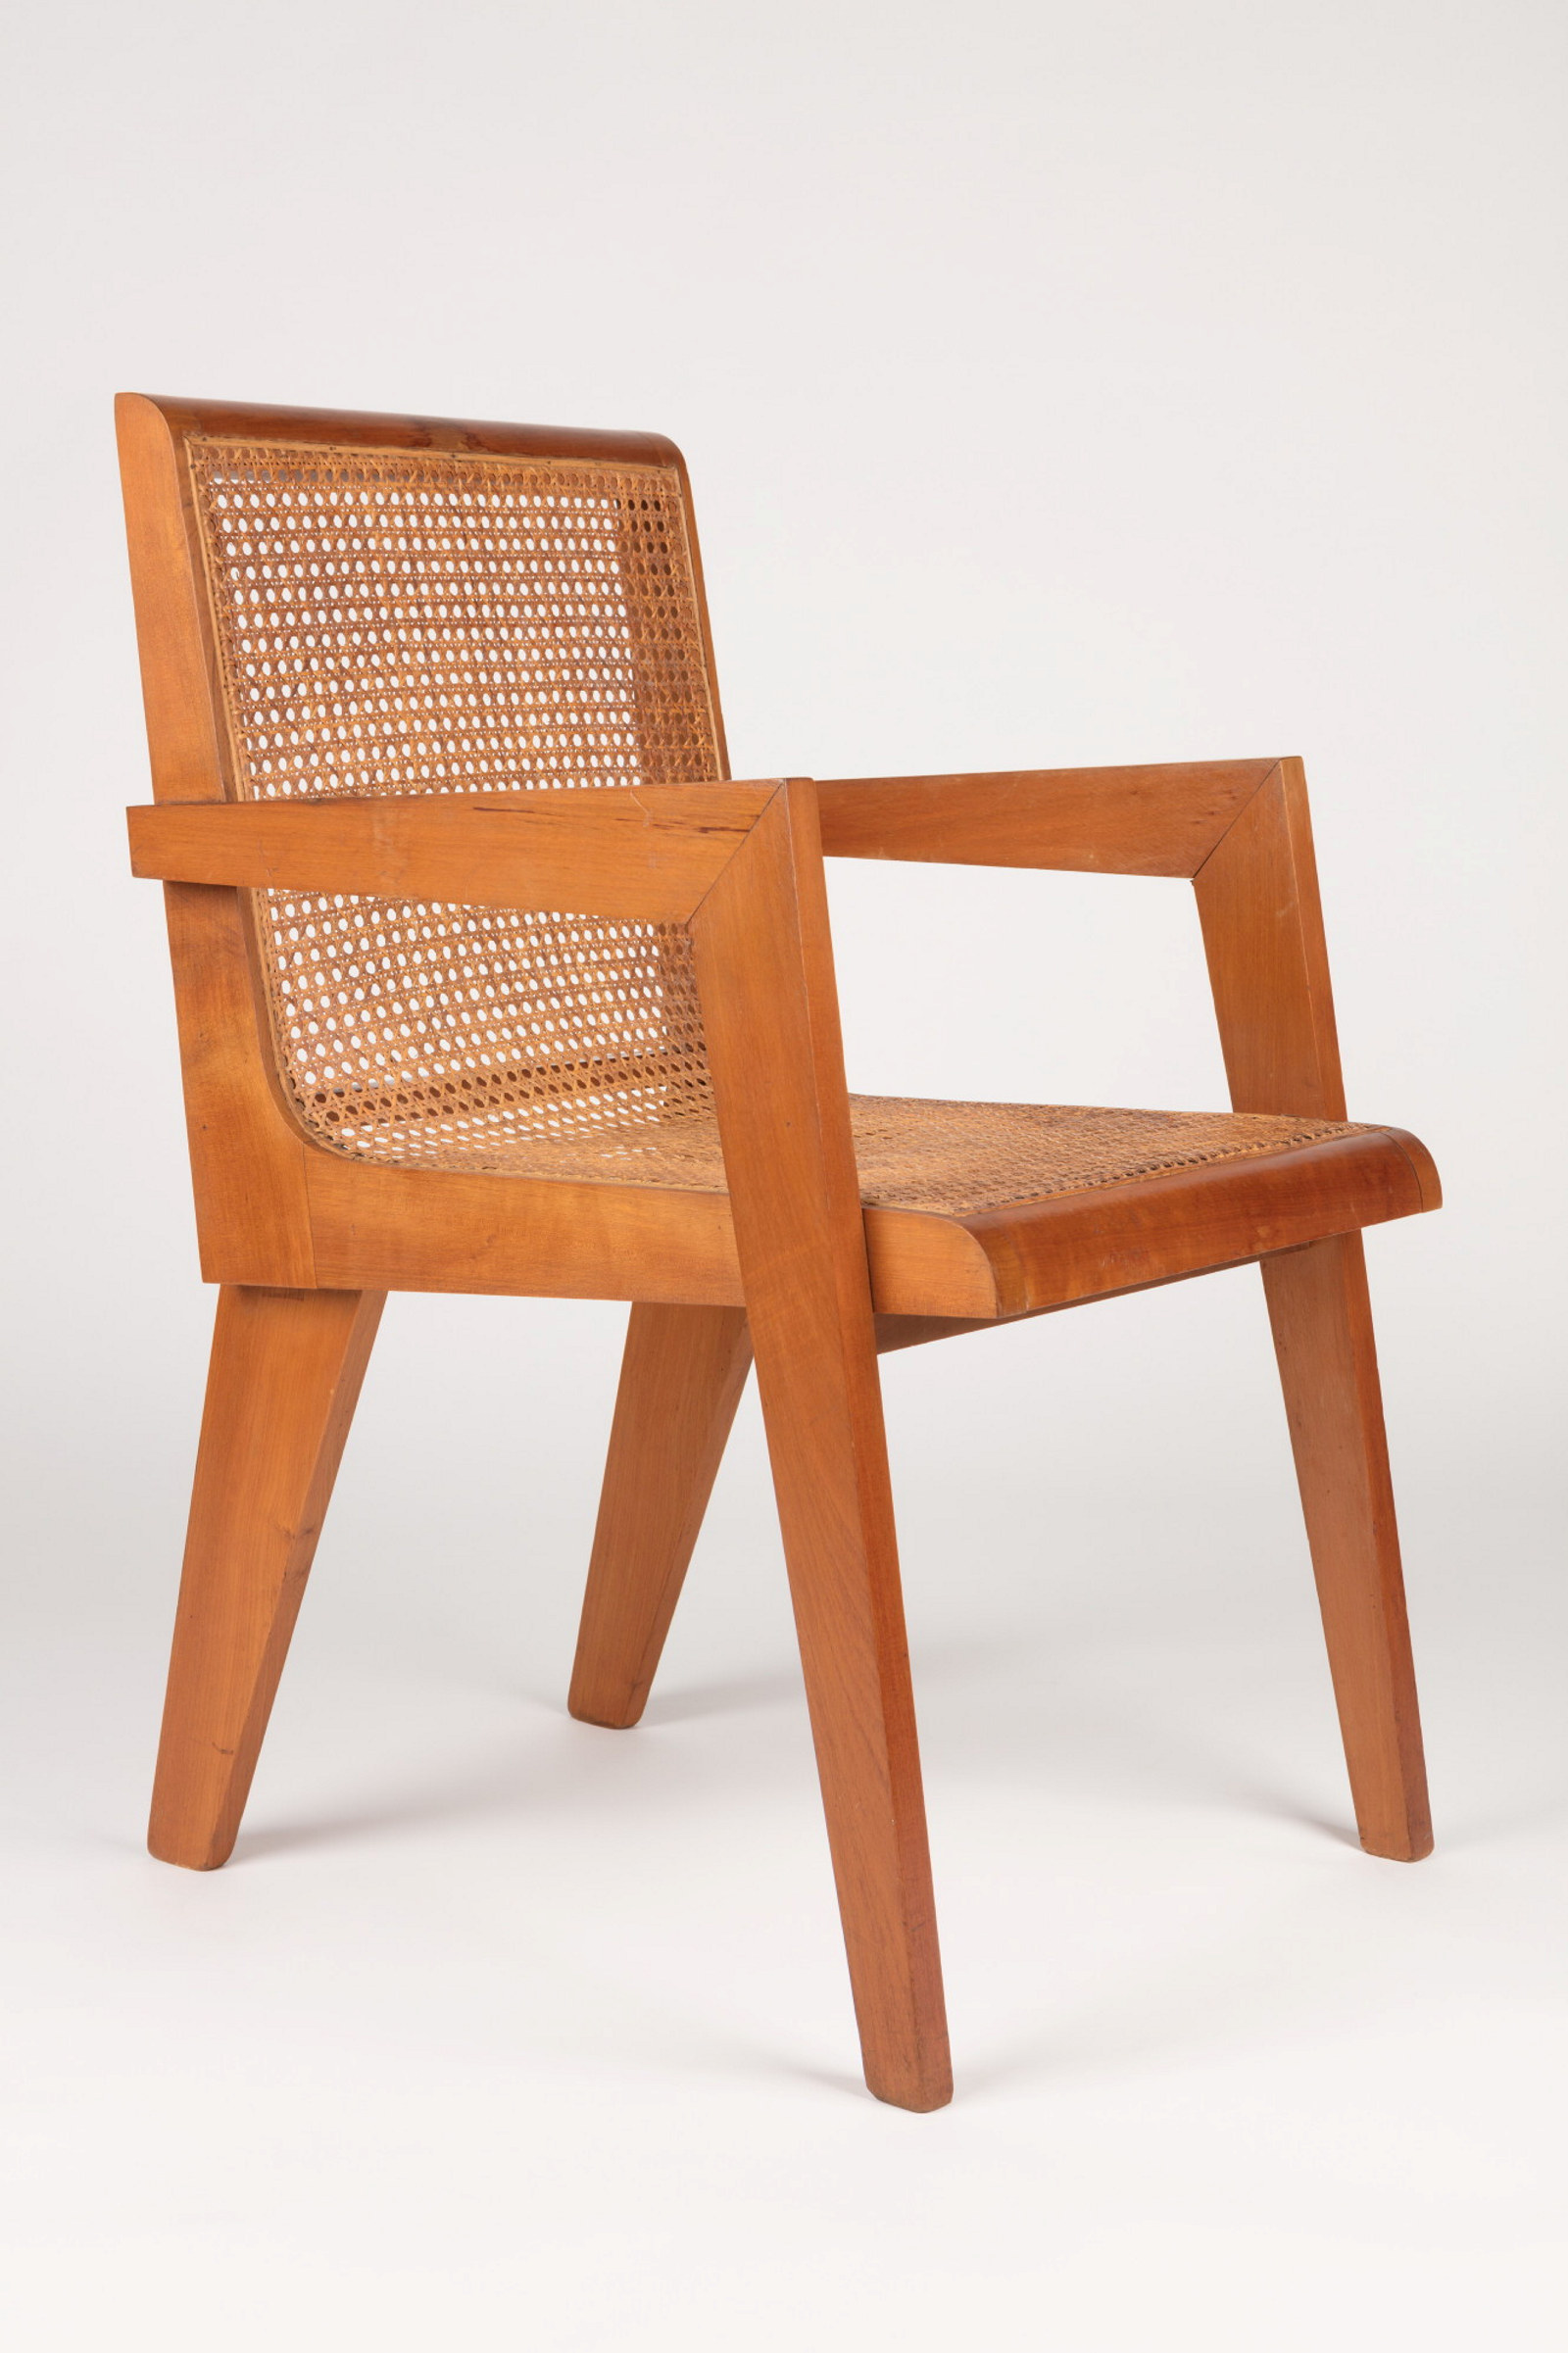 Coachwood carver chair